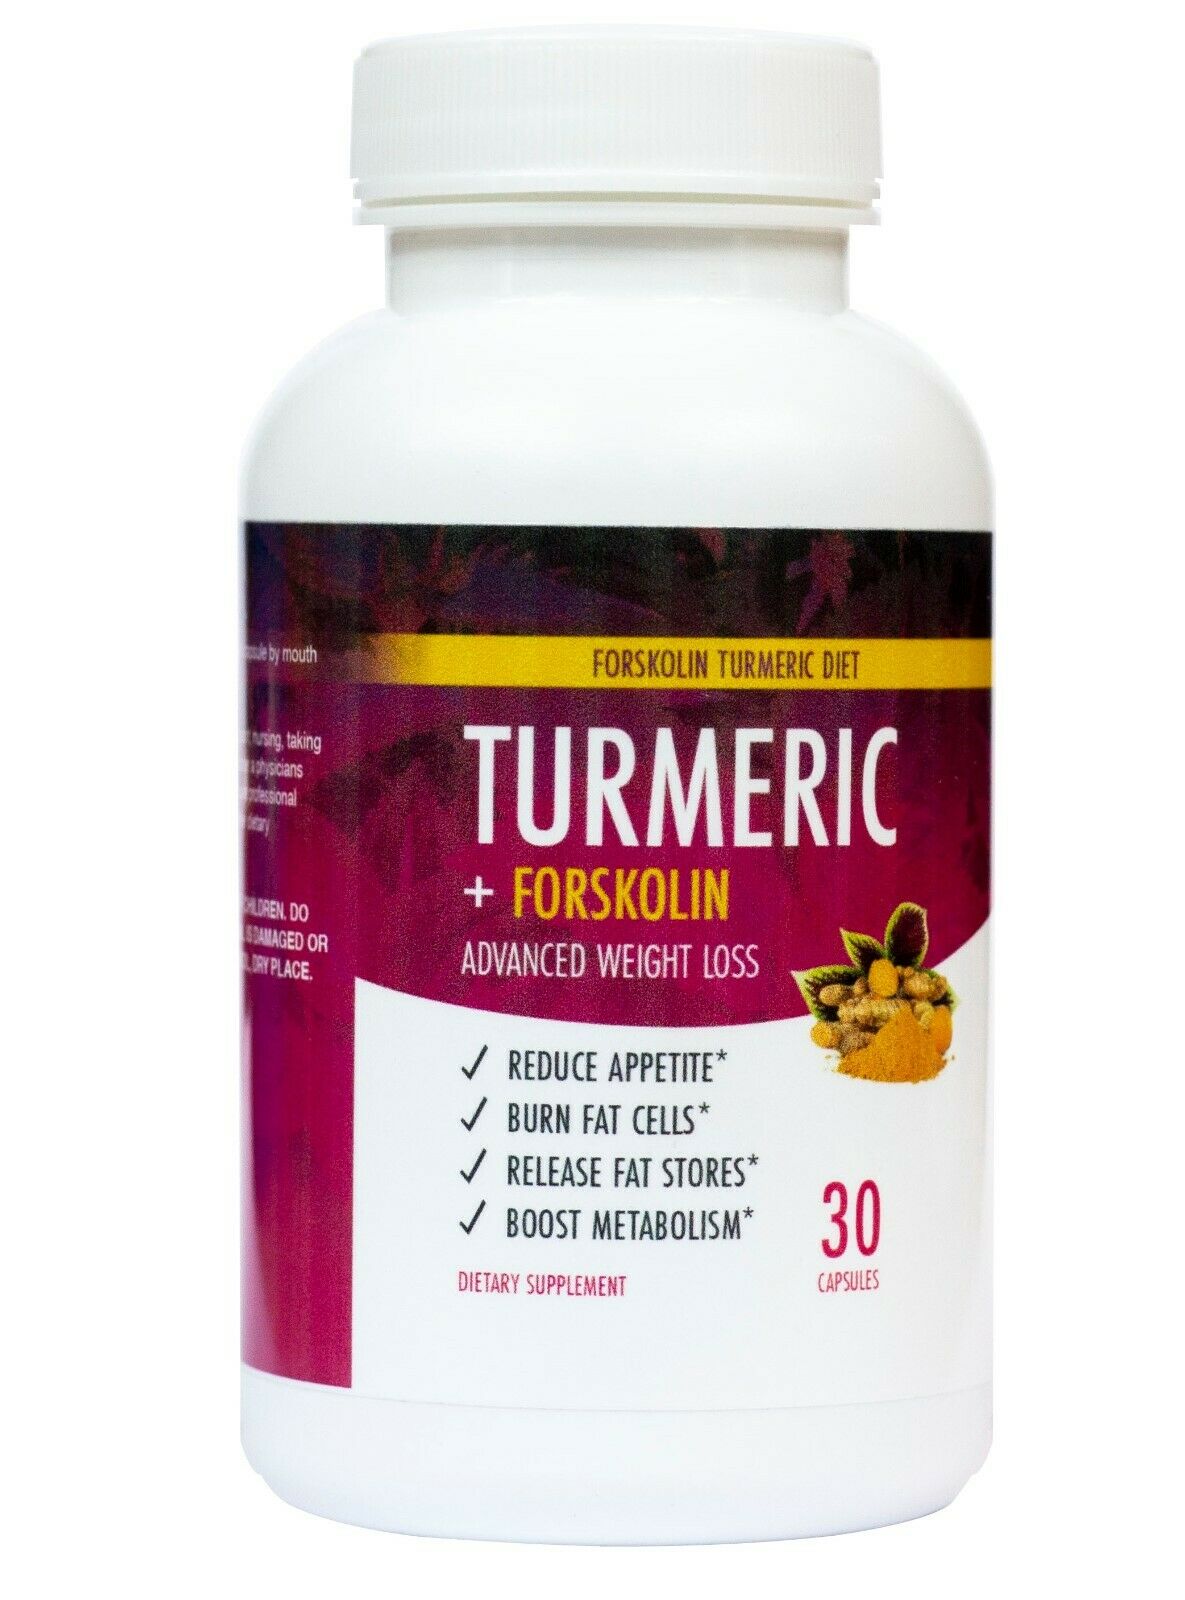 Turmeric + Forskolin Advanced Weight Loss Formula Fat Burn Flawless Diet Capsule